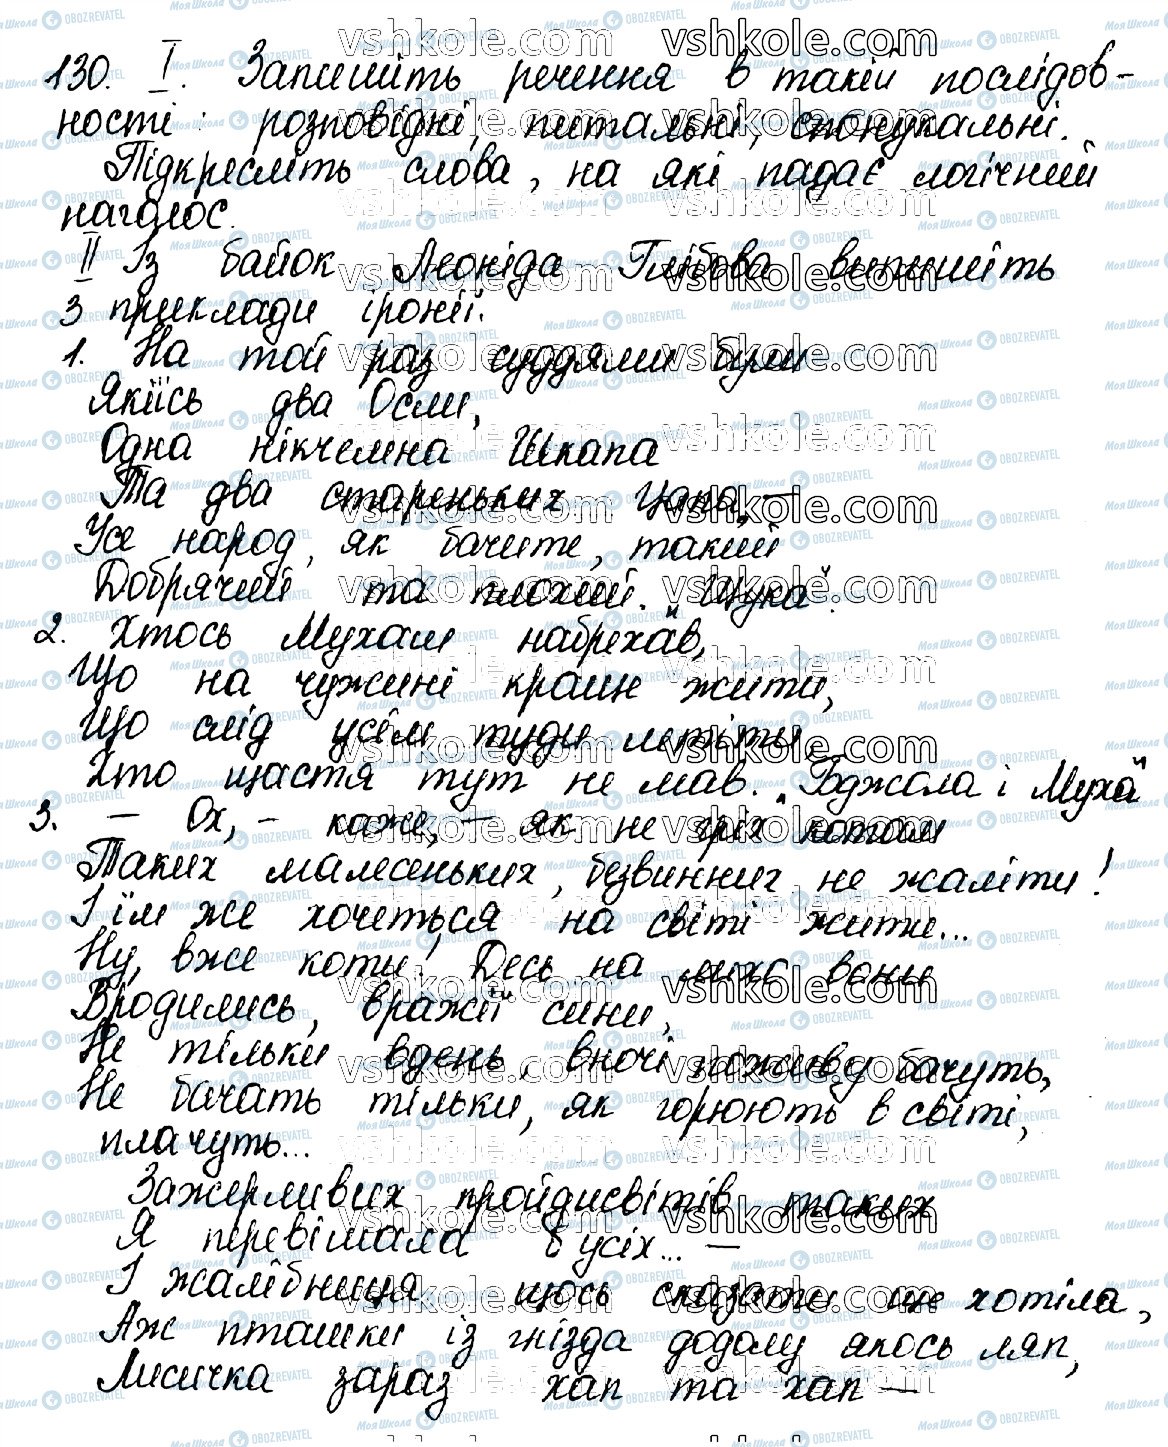 ГДЗ Укр мова 10 класс страница 130